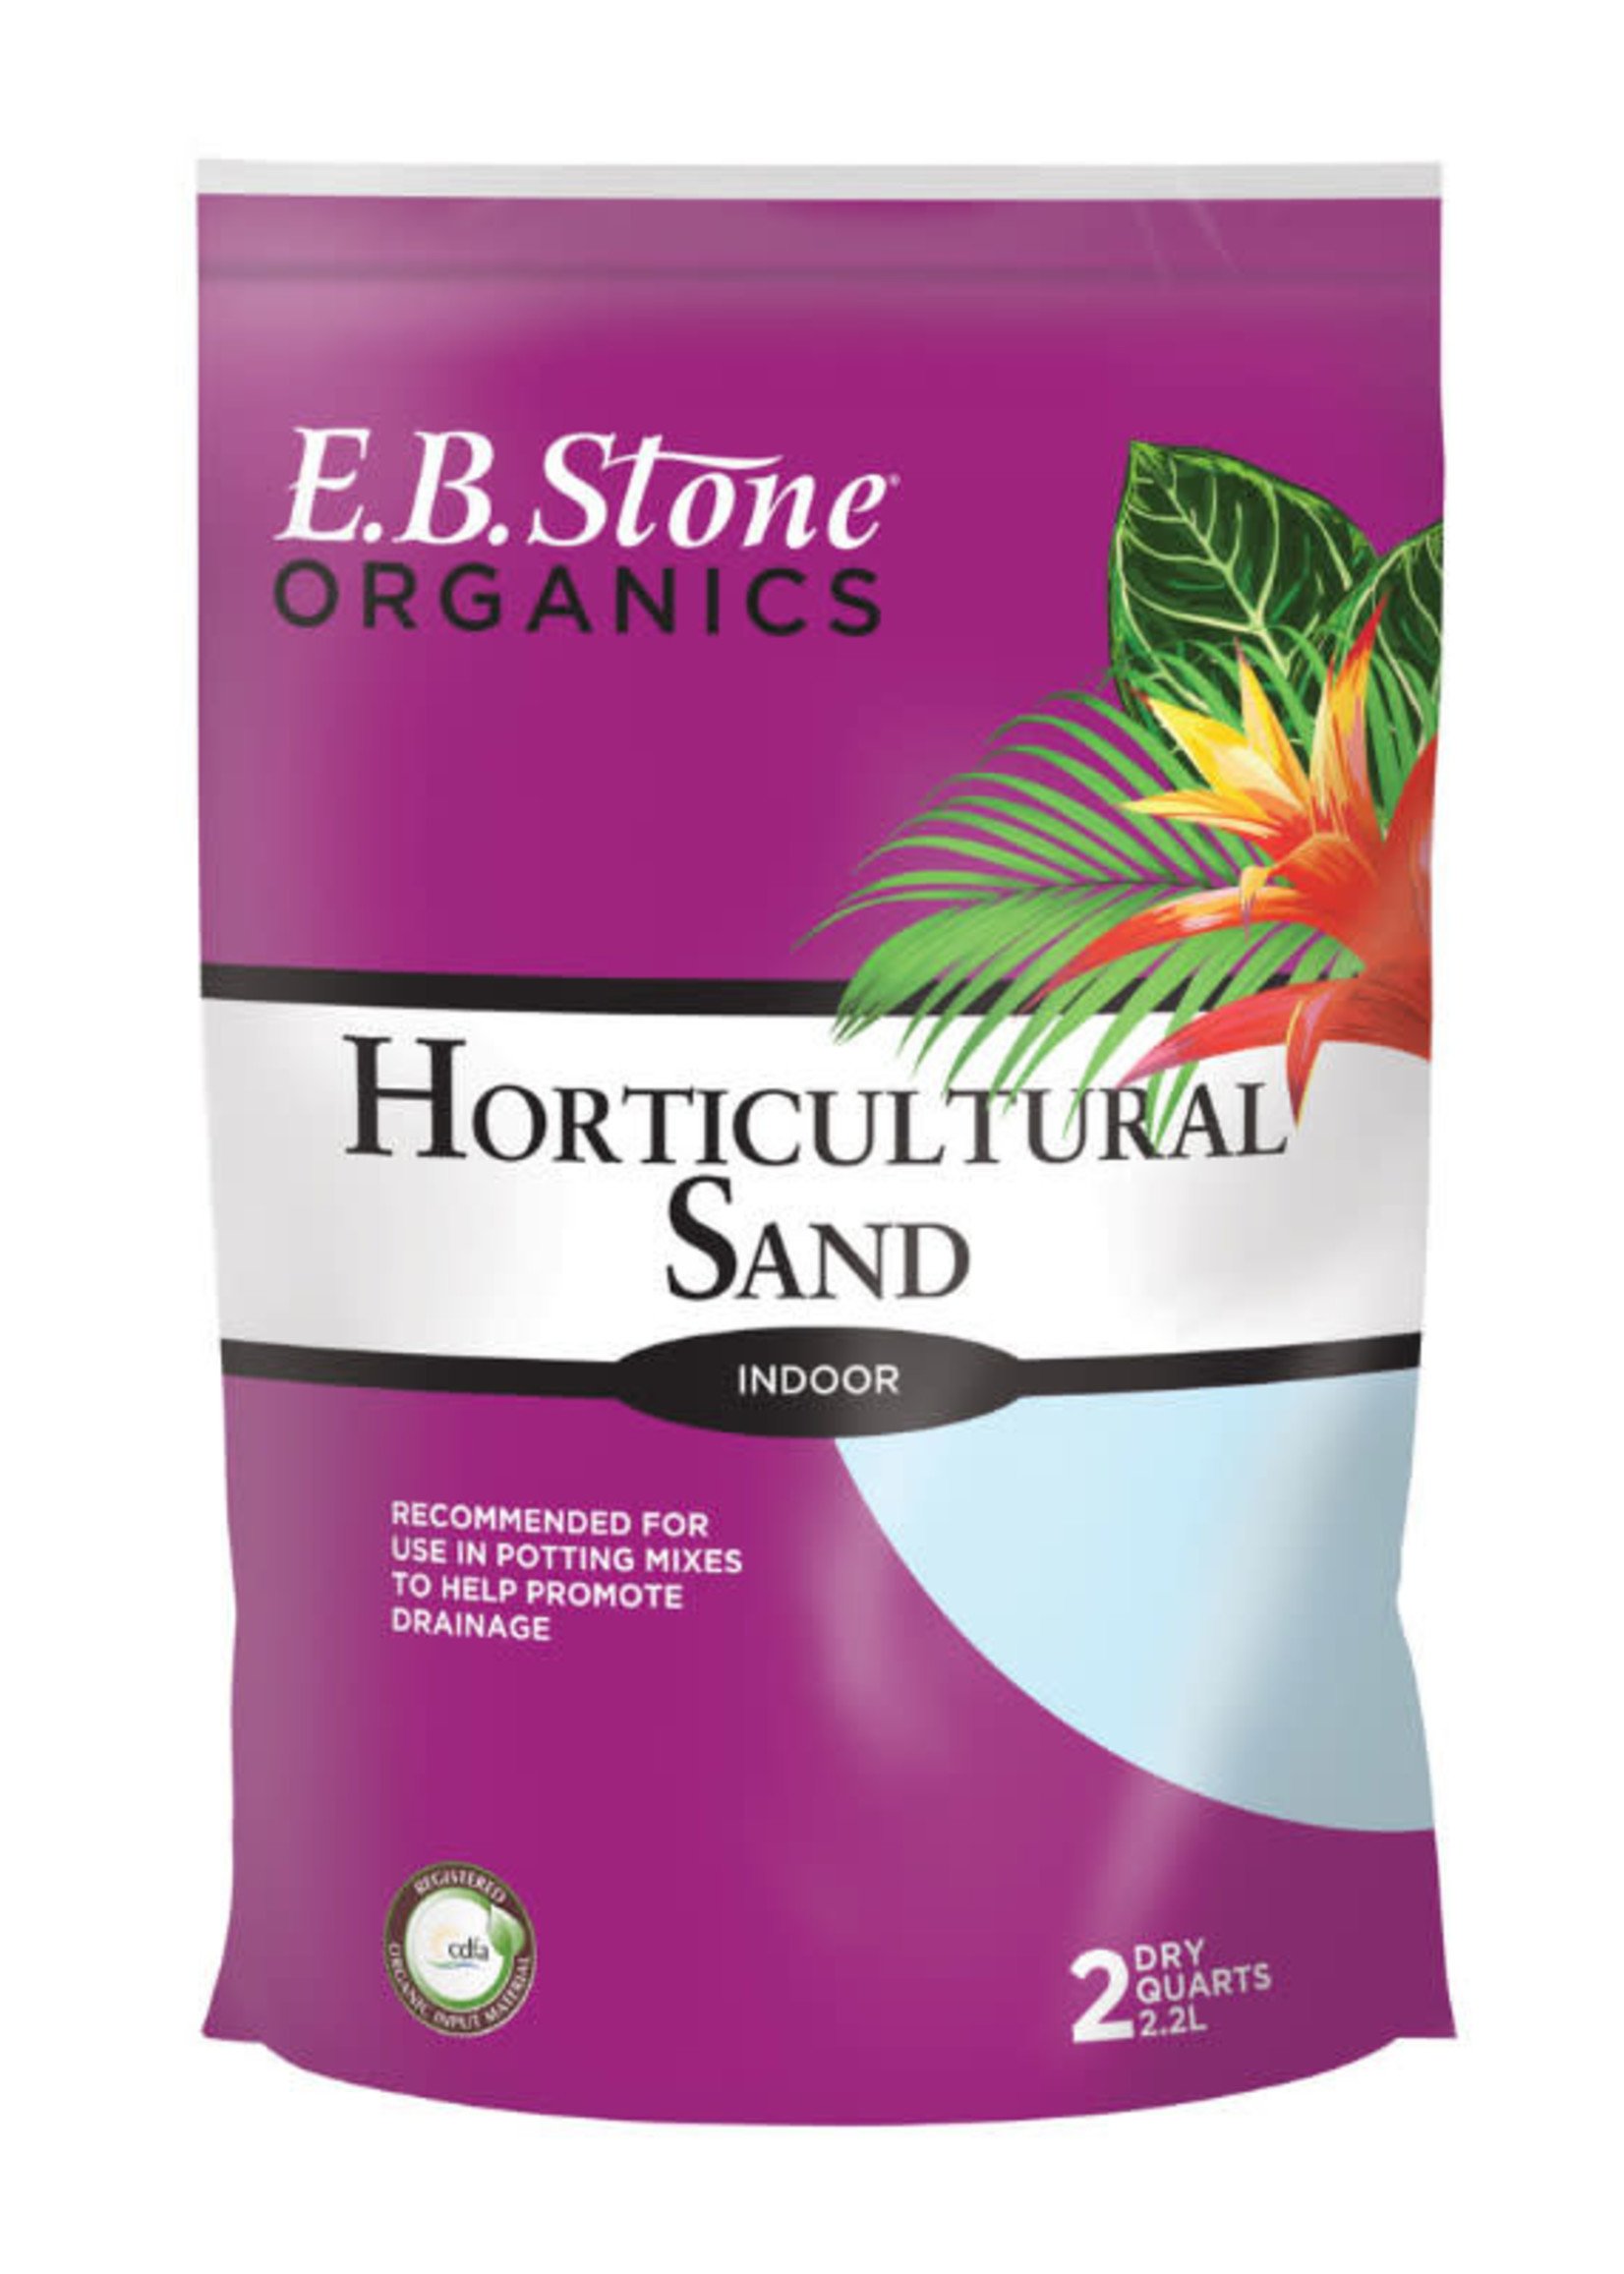 E.B. Stone Organics E.B. Stone Horticultural Sand 2 qt